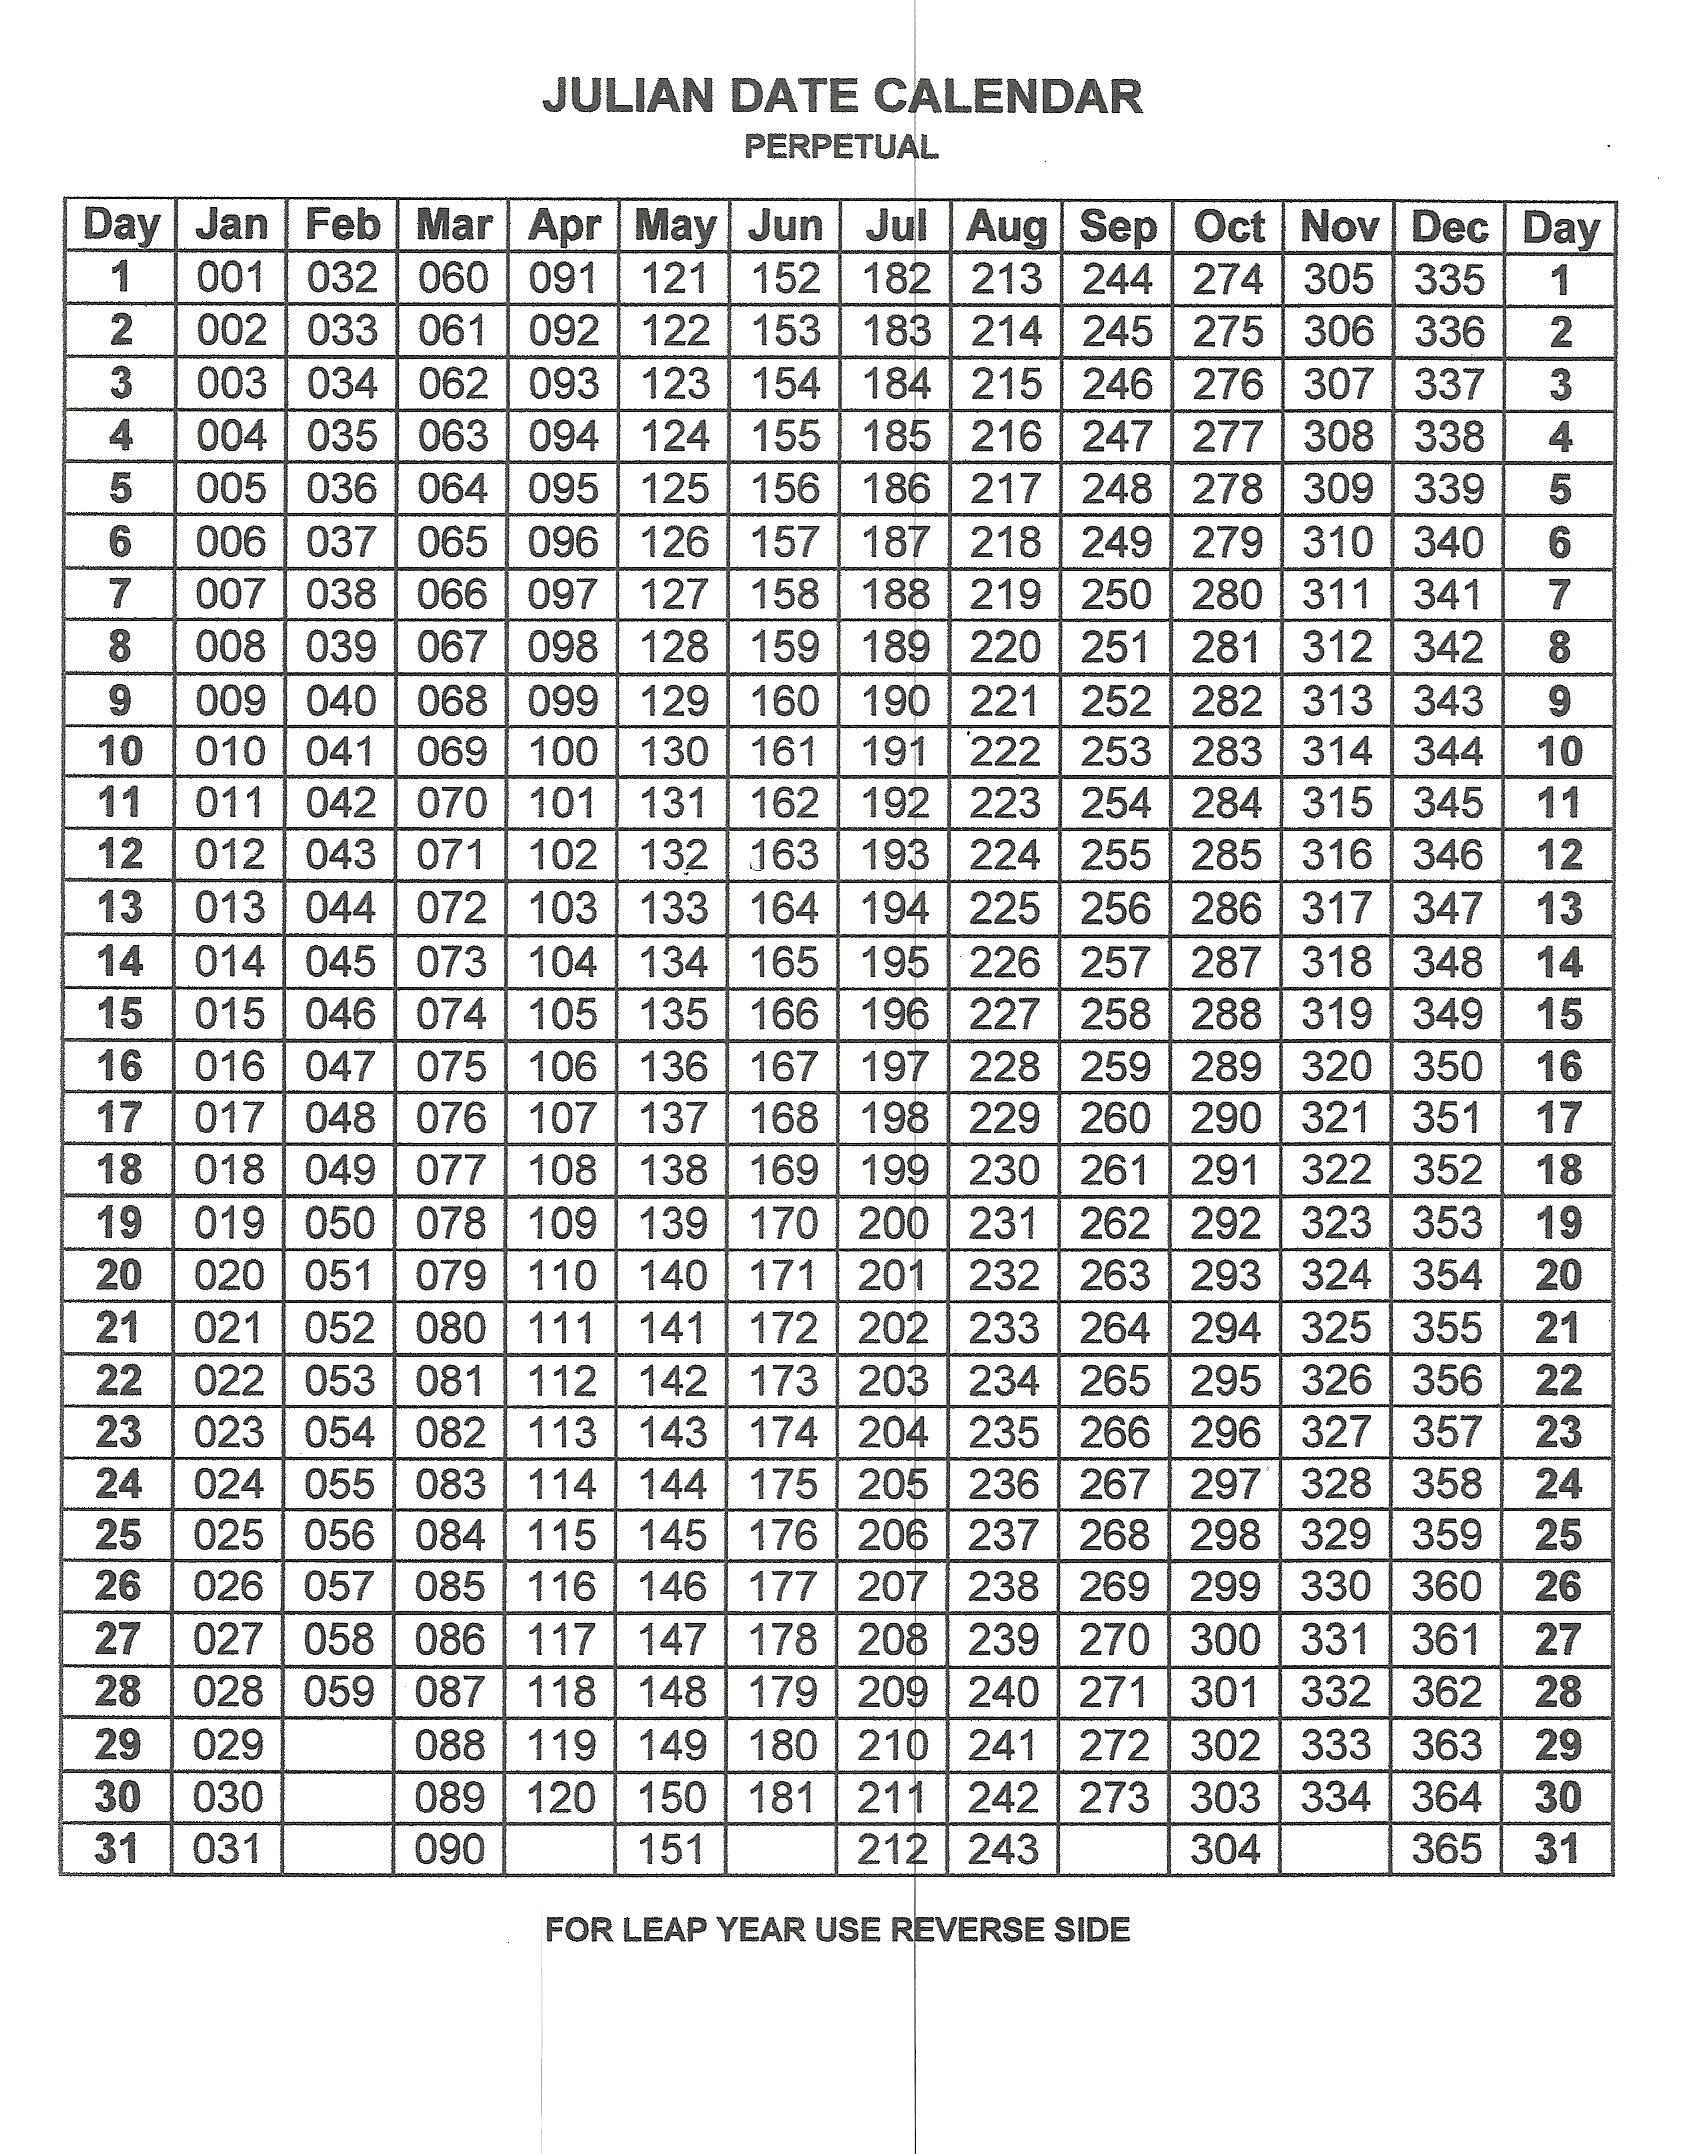 Calendar Year Julian Date | Ten Free Printable Calendar pertaining to Perpetual Julian Date Calendar With Leap Year